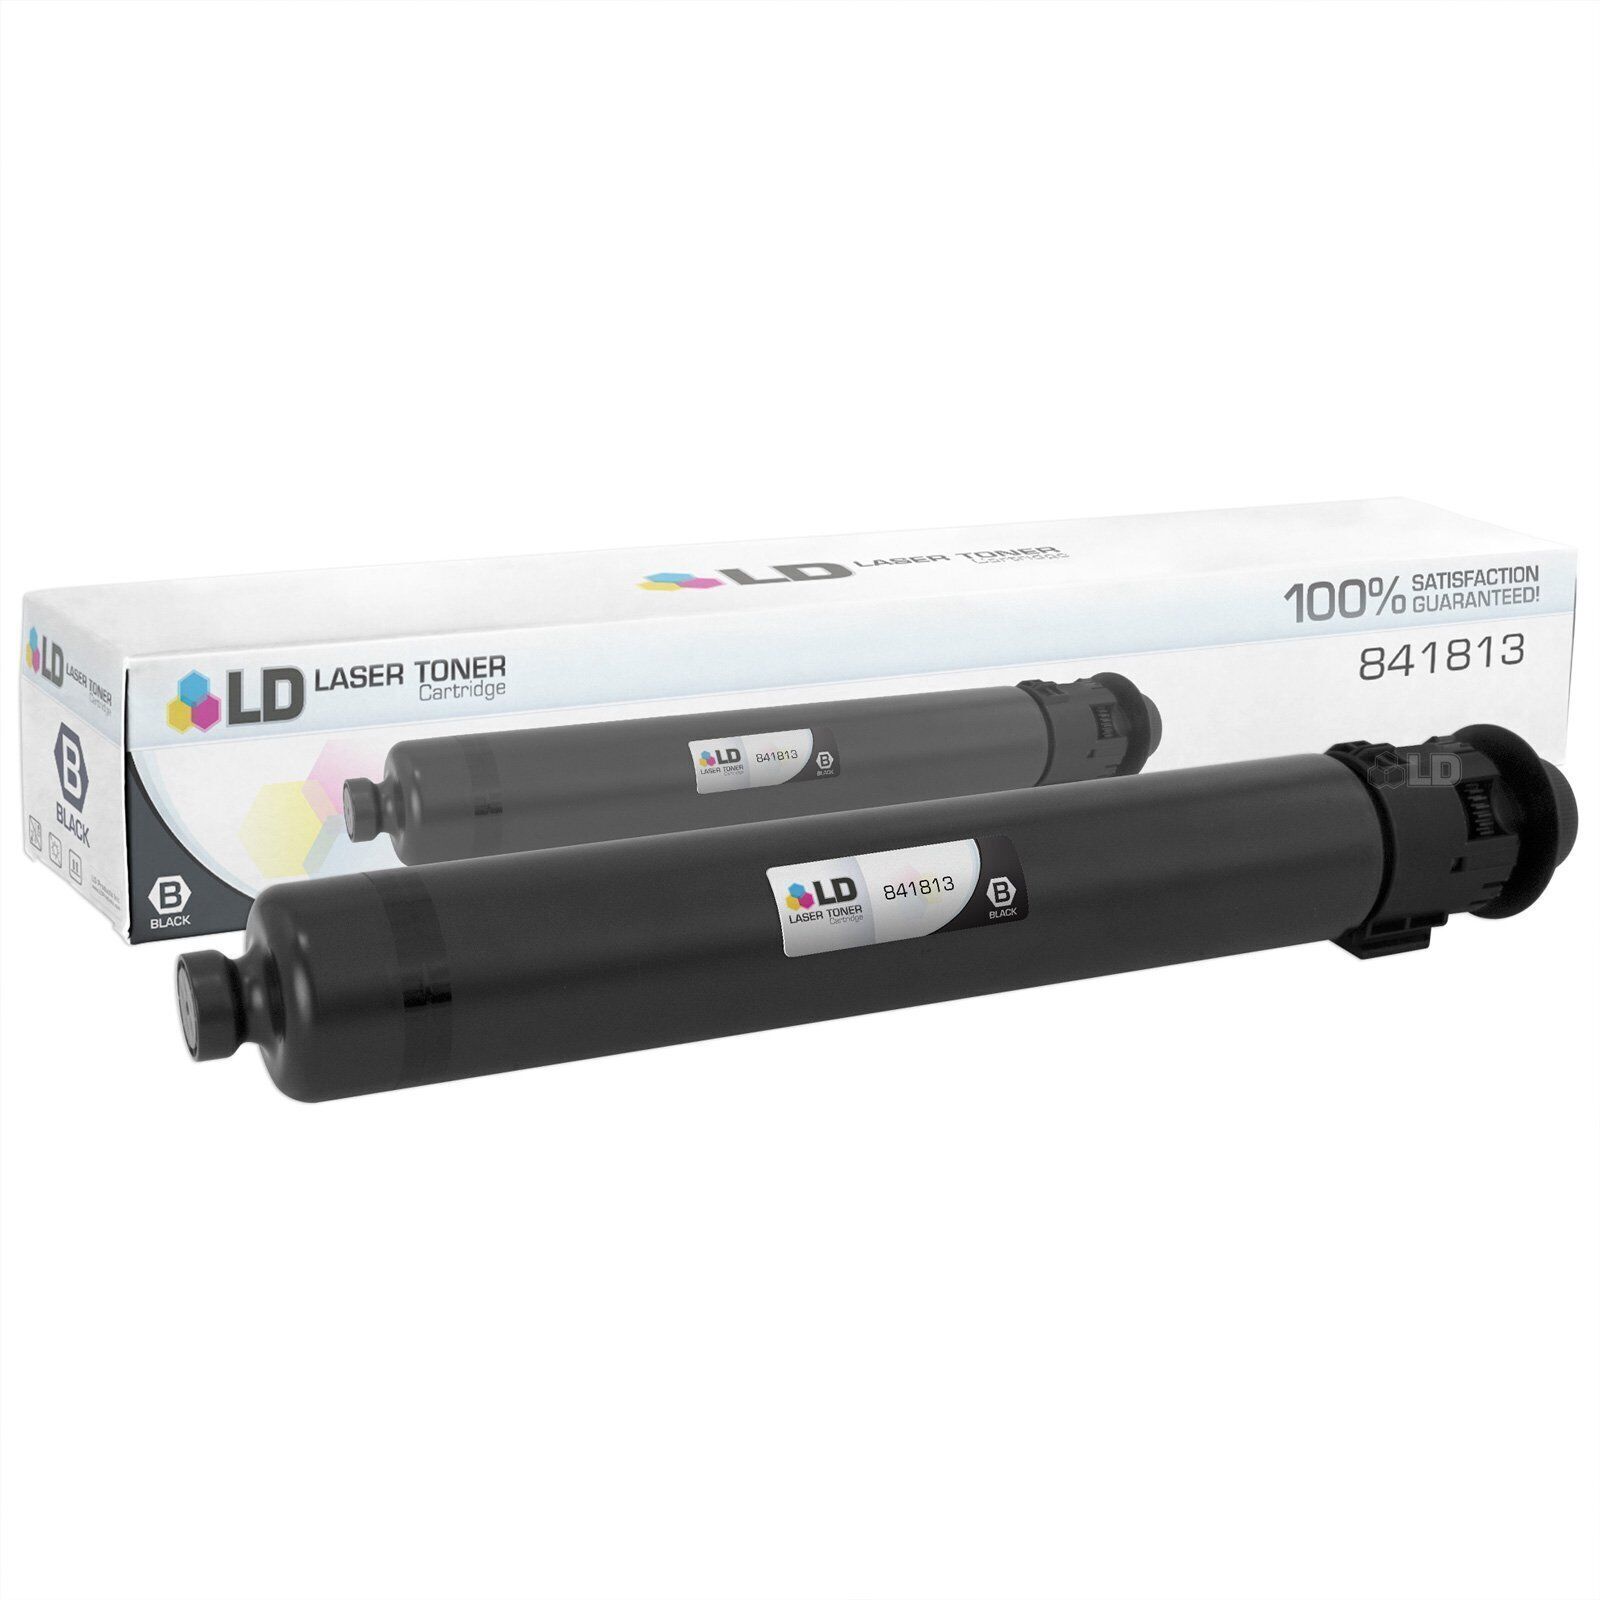 LD 841813 MP C3503 Black Laser Toner Cartridge for Ricoh Printer